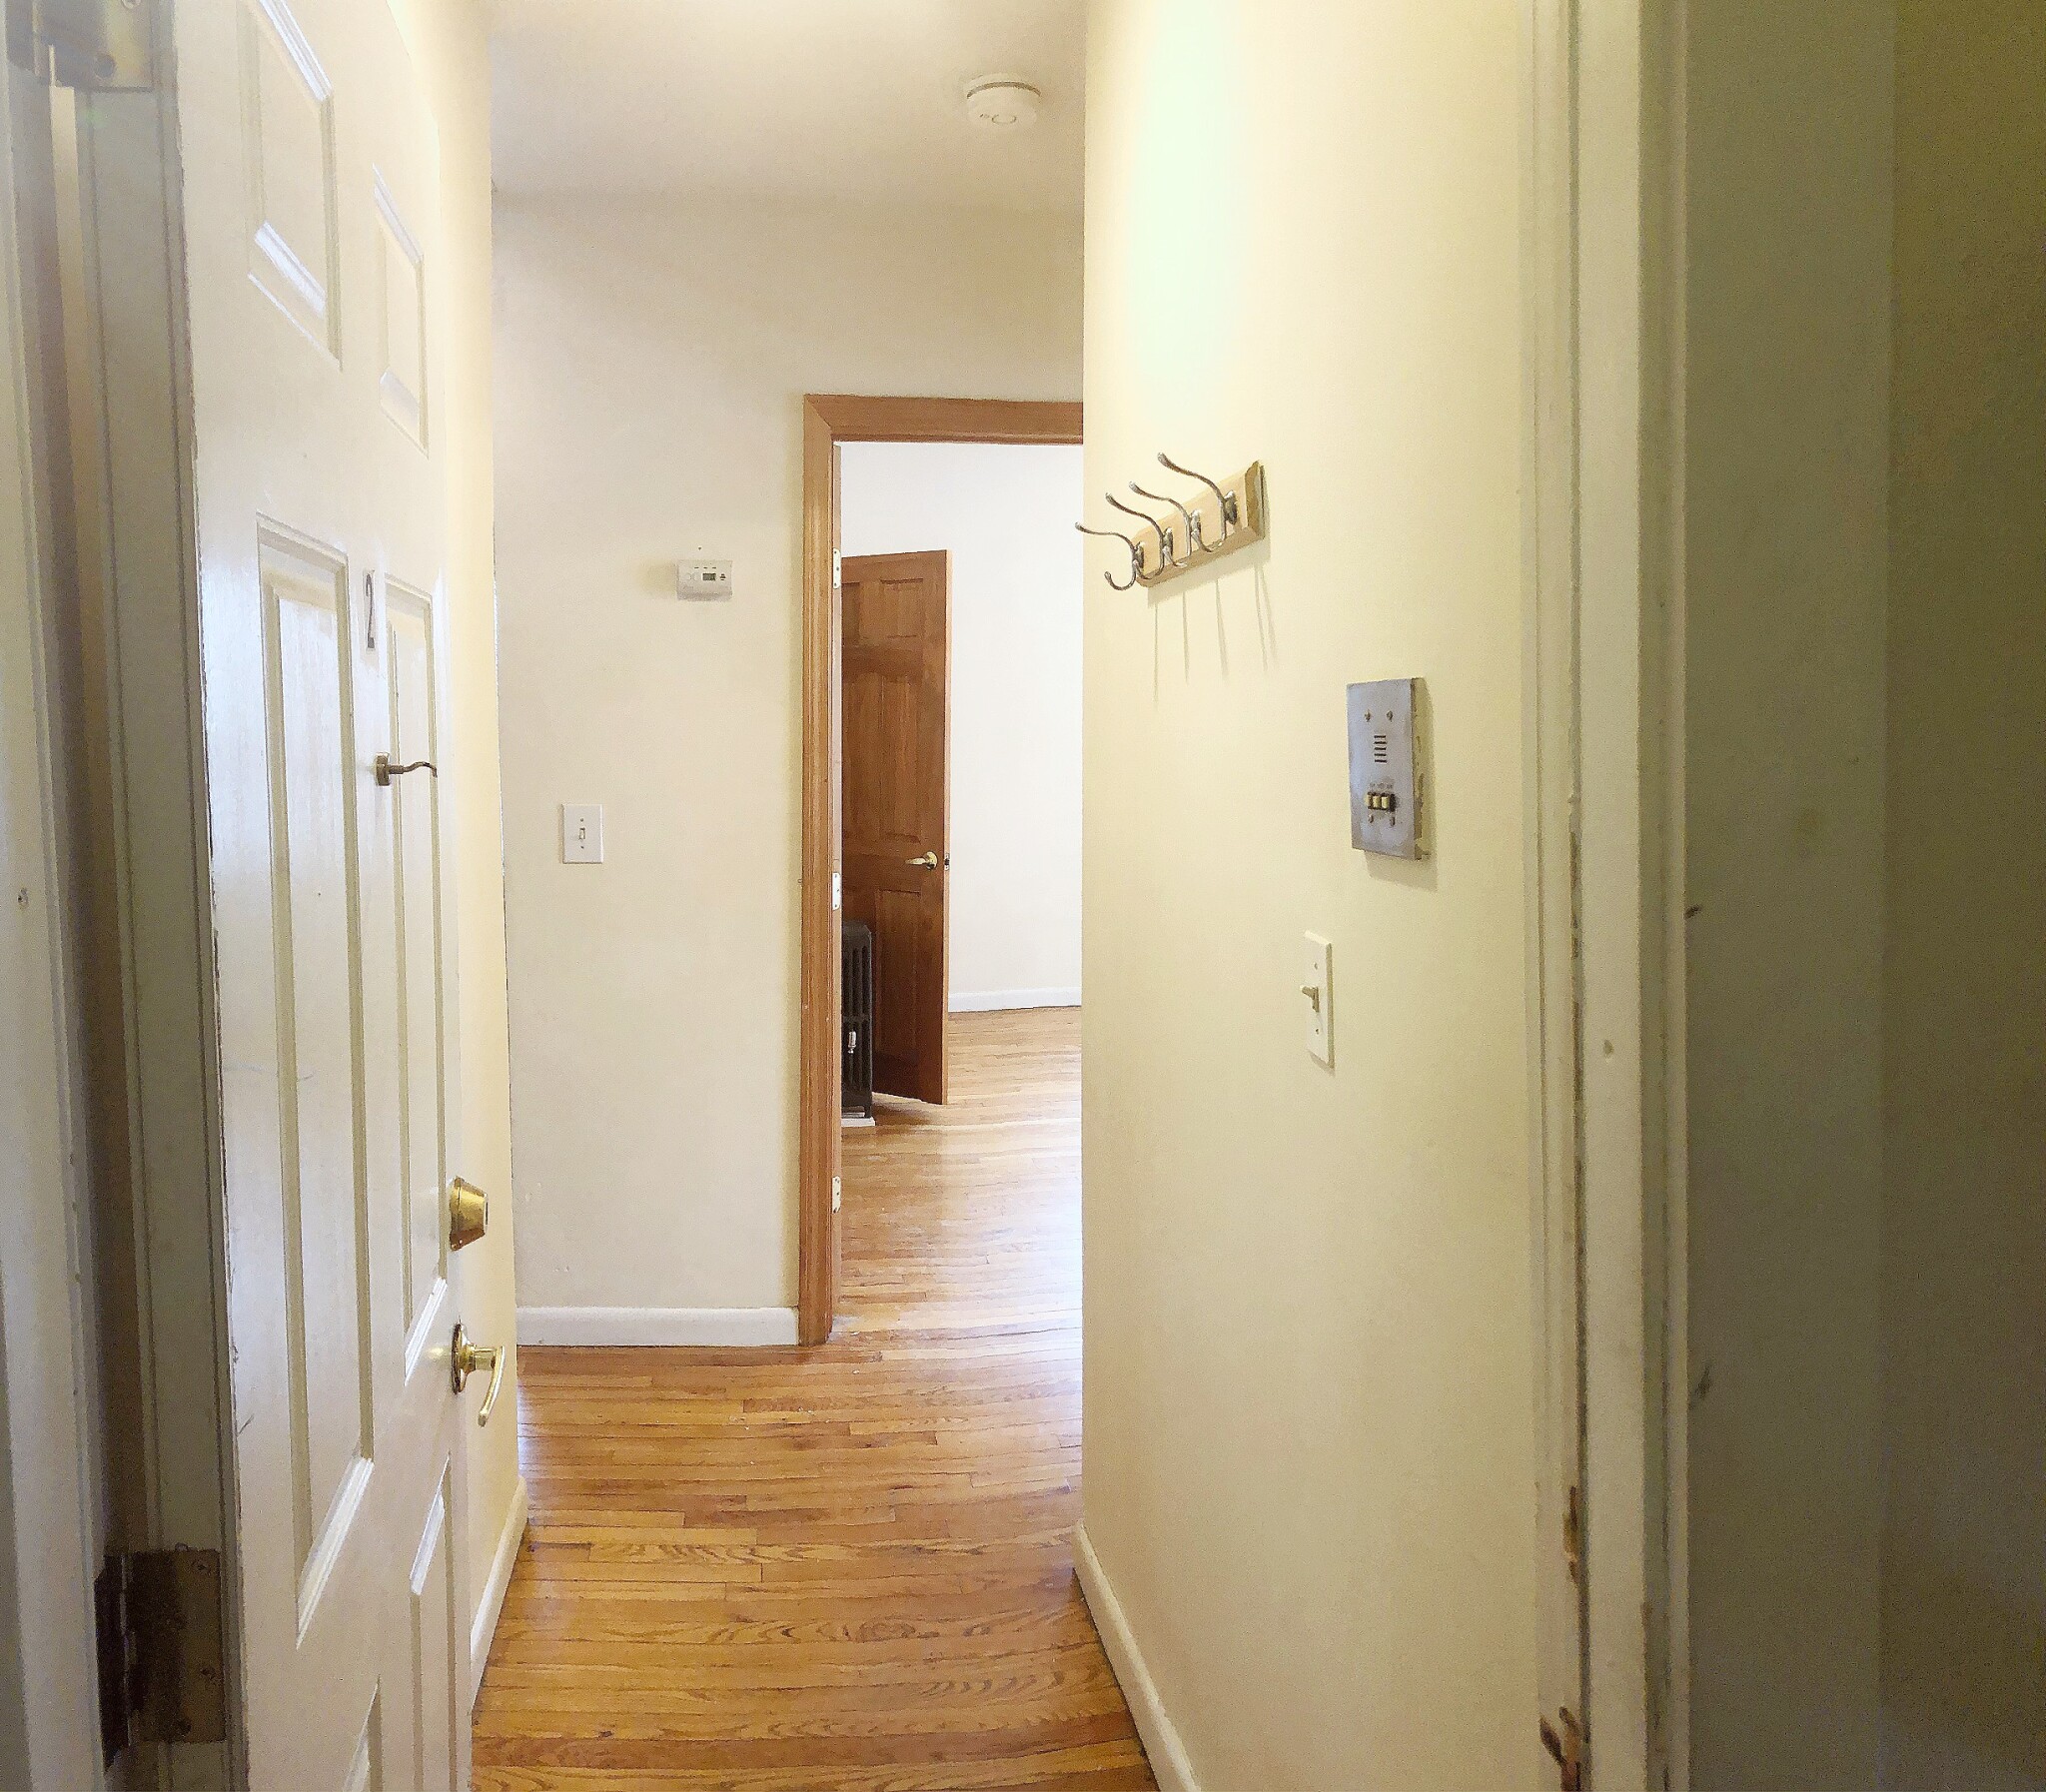 Photos of apartment on Alberta Terr,Cambridge MA 02140